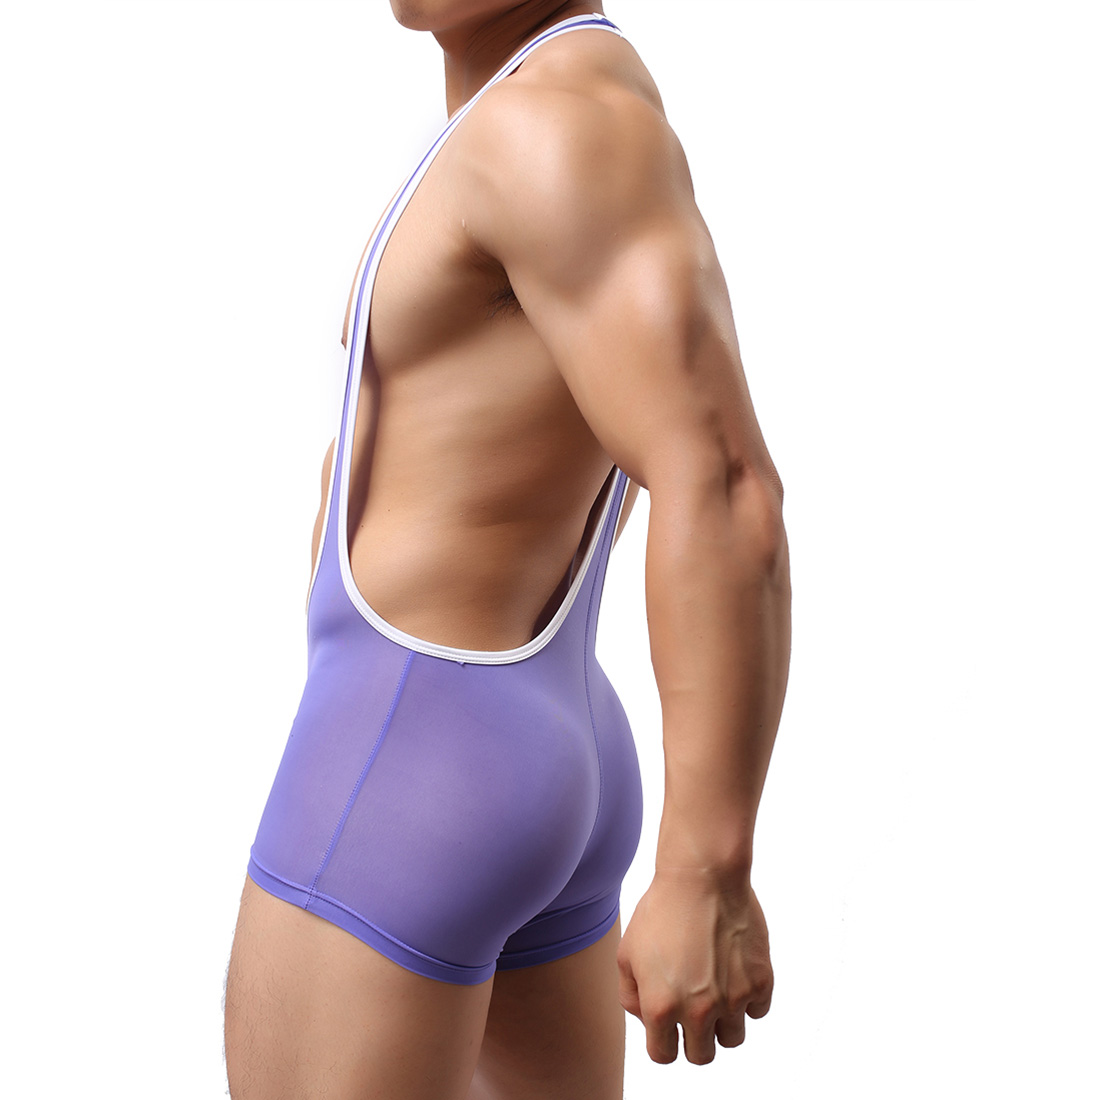 Men's Sexy Lingerie Underwear Sport Fitness One-pieces Swimsuit Wrestling Dress WH41 Purple L